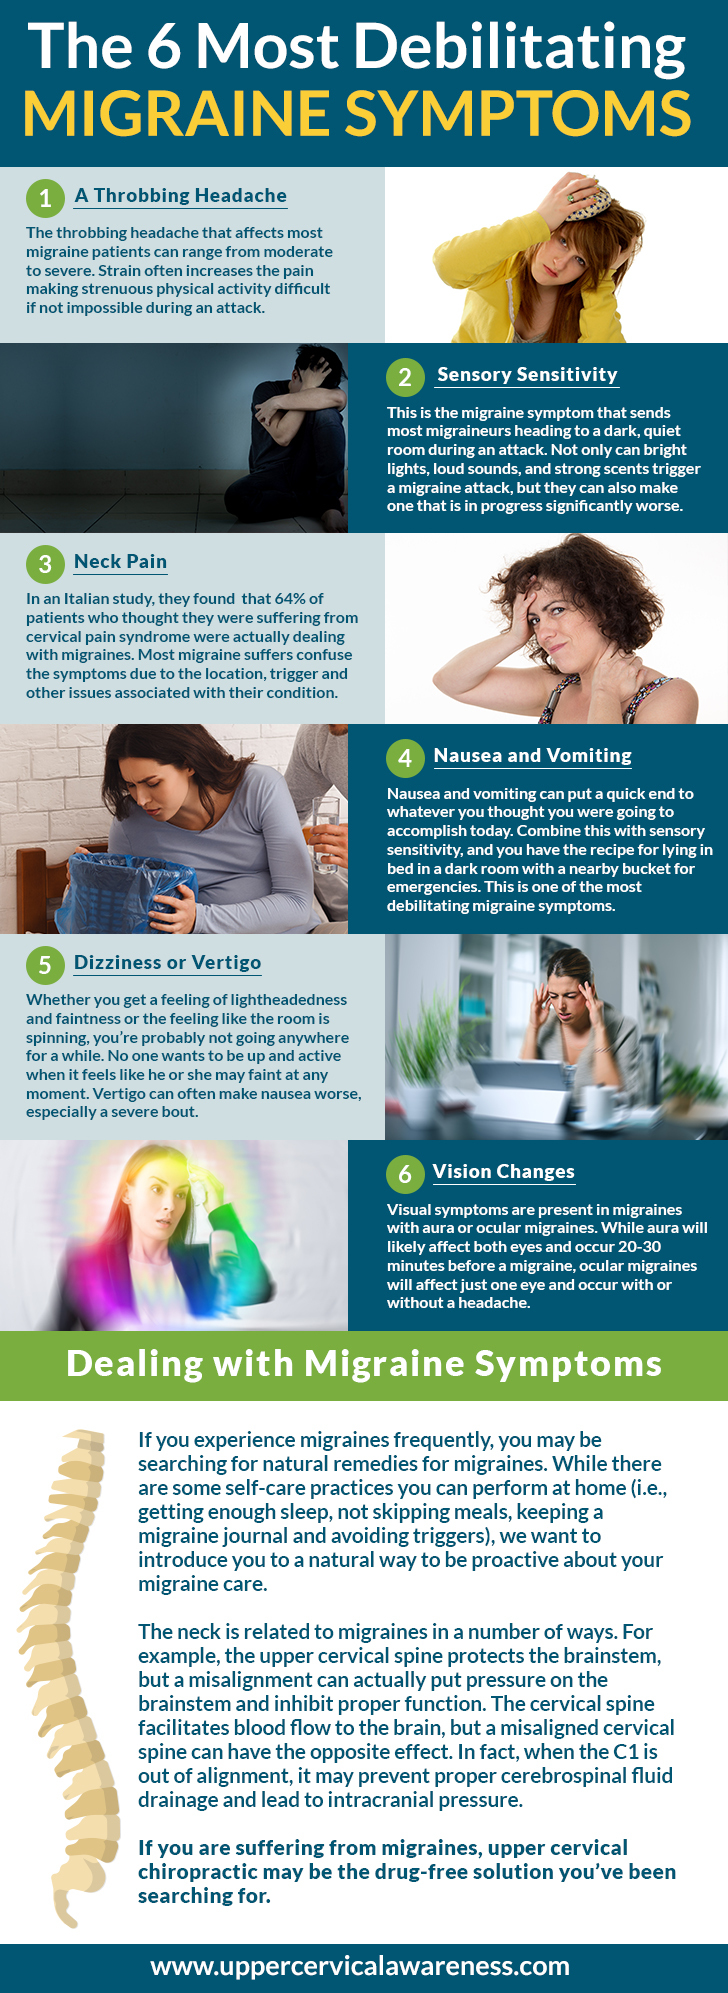 The 6 Most Debilitating Migraine Symptoms